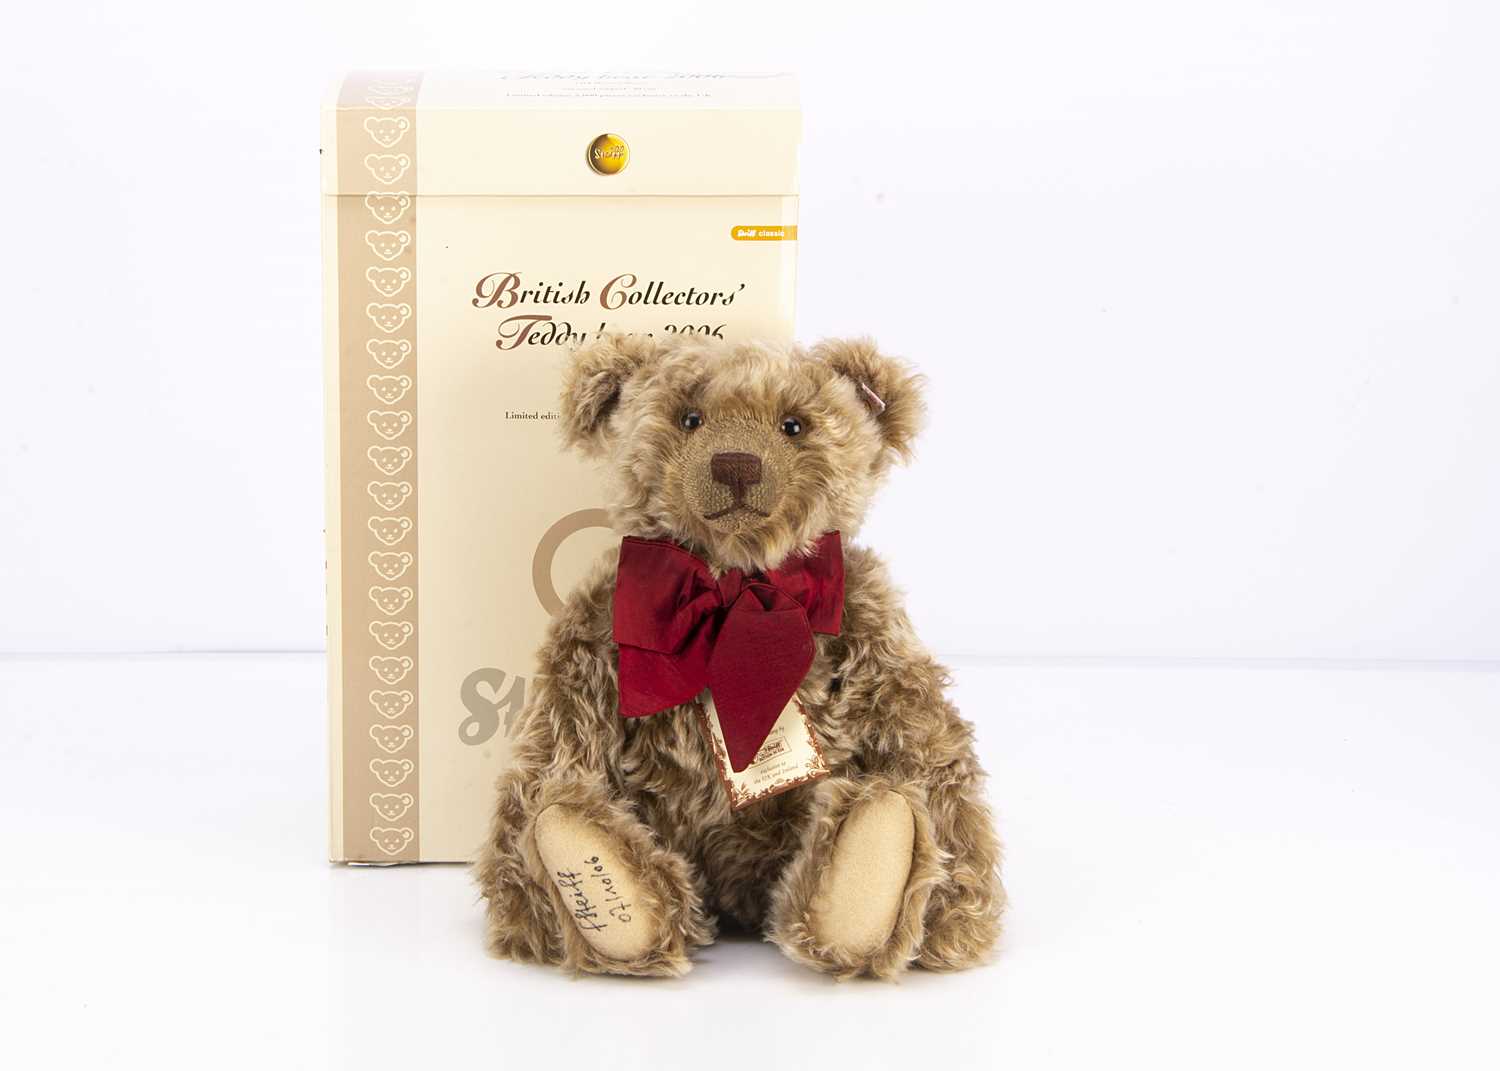 A Steiff limited edition British Collectors 2006 teddy bear,